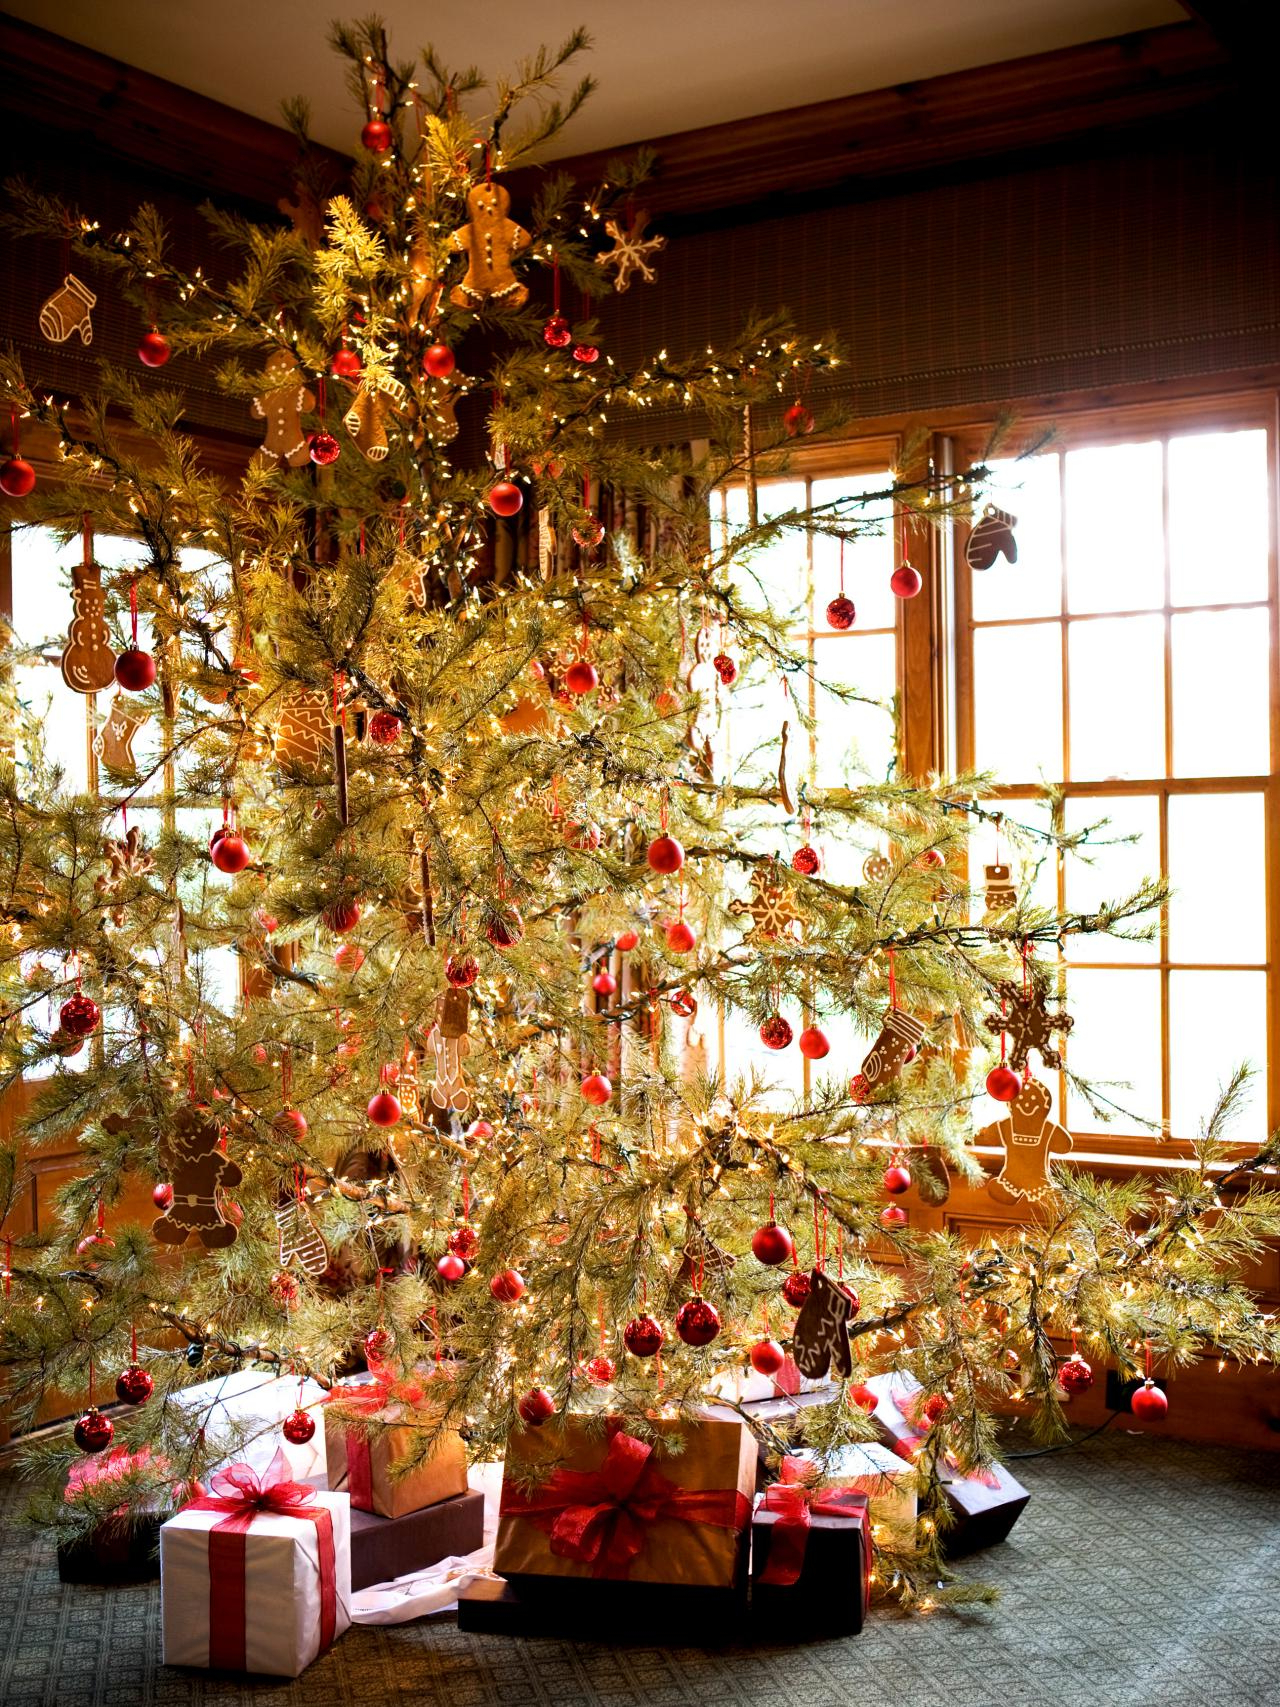 40 Elegant Christmas Tree Decorations Ideas Decoration Love